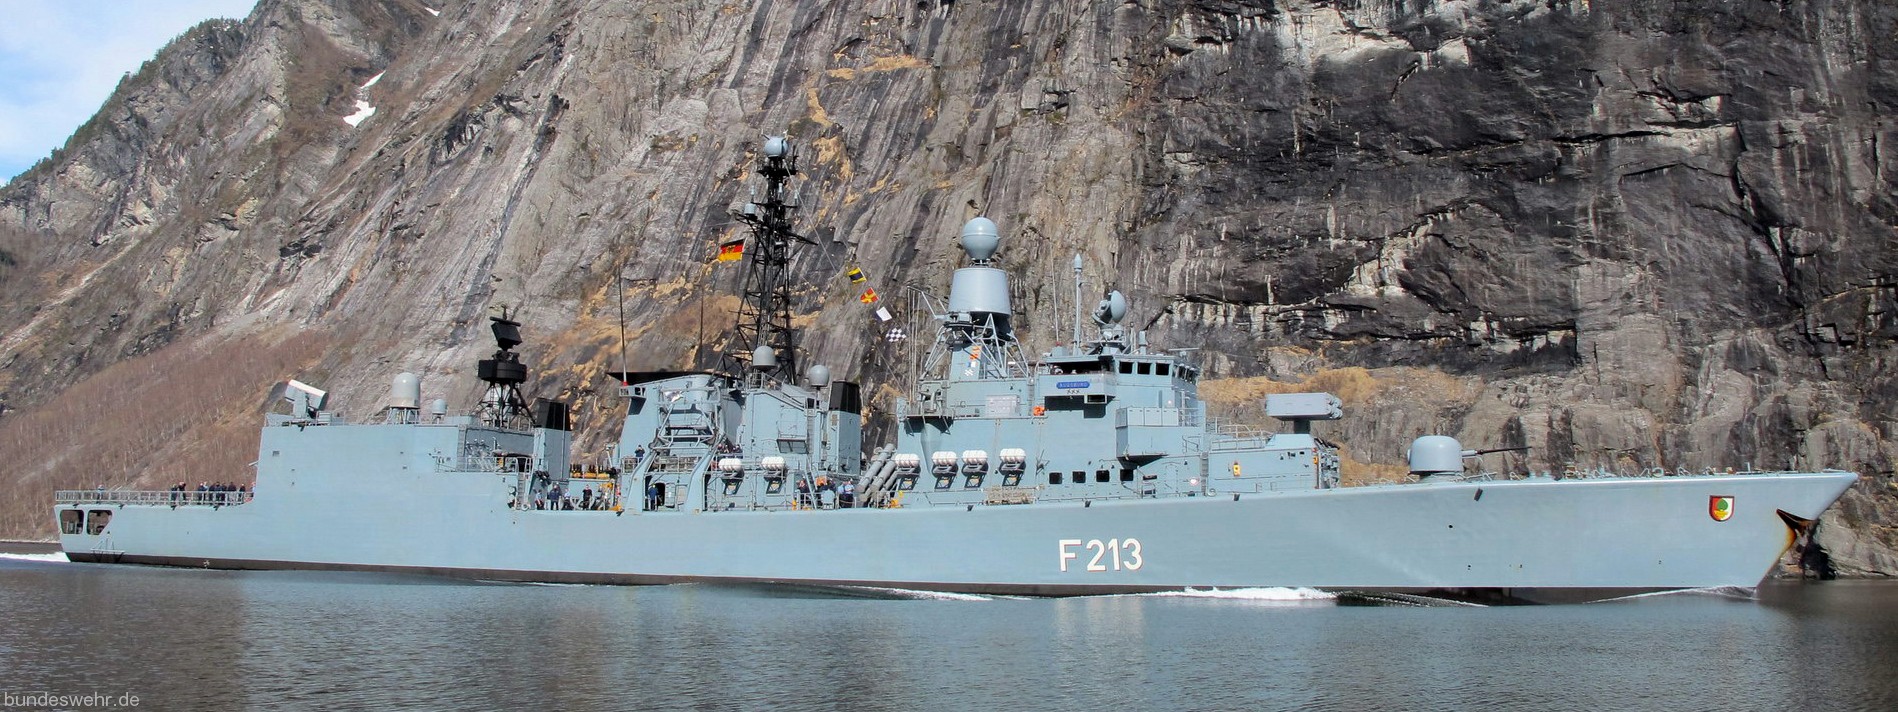 f-213 fgs augsburg type 122 bremen class frigate german navy 04